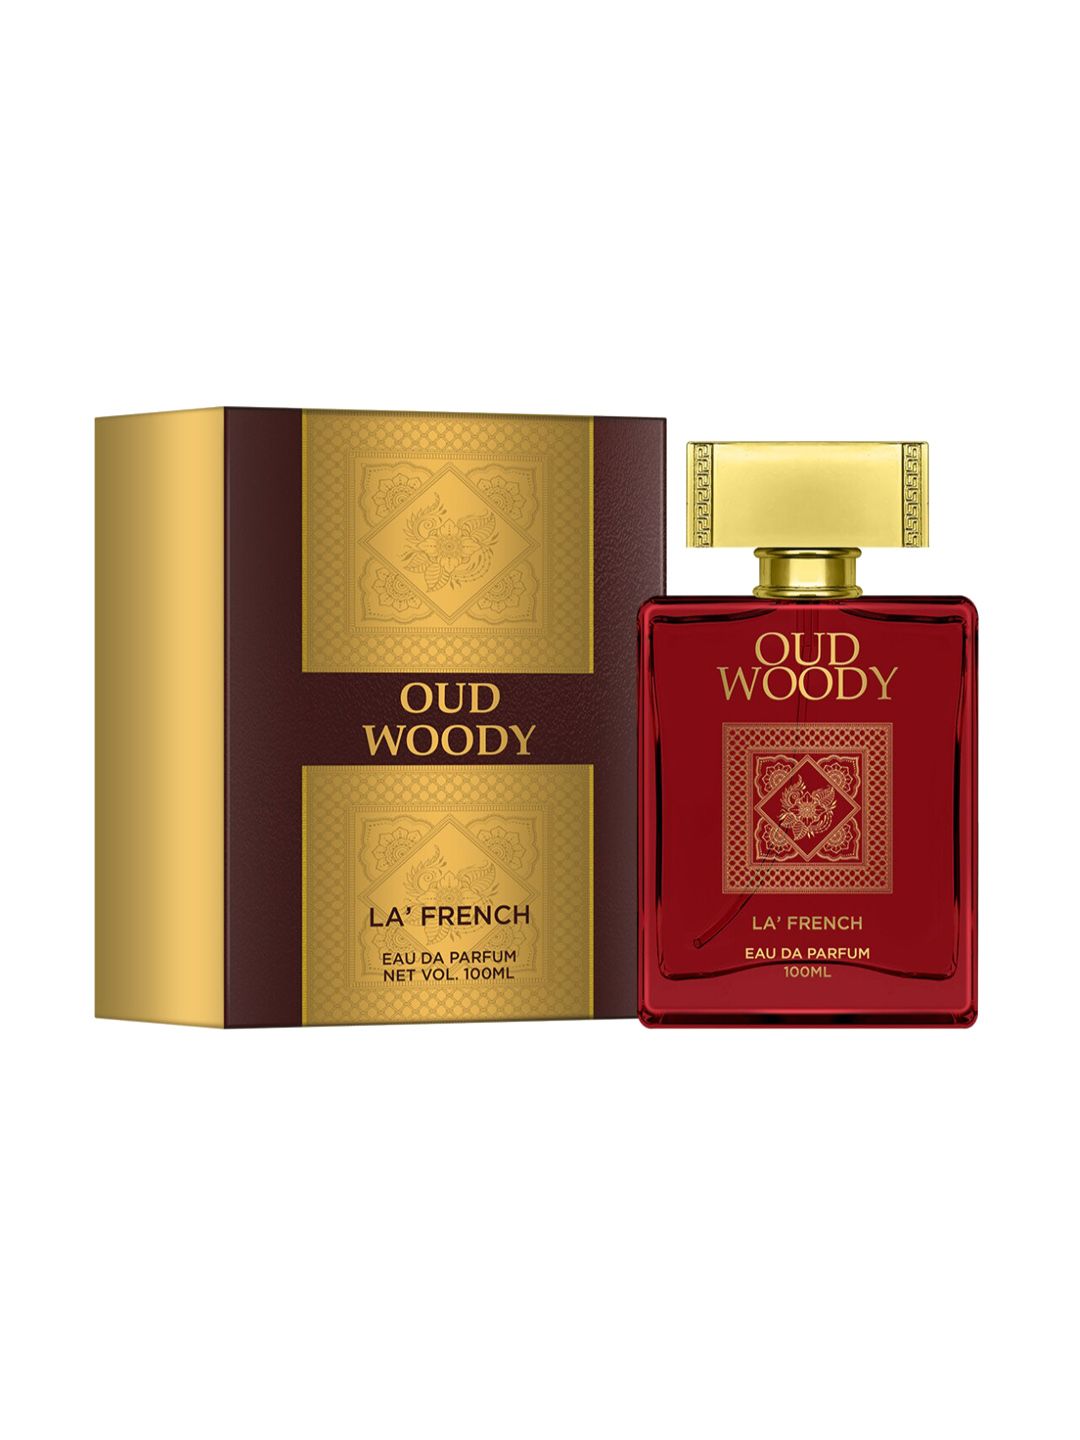 La French Oud Woody Eau De Parfum - 100 ml Price in India